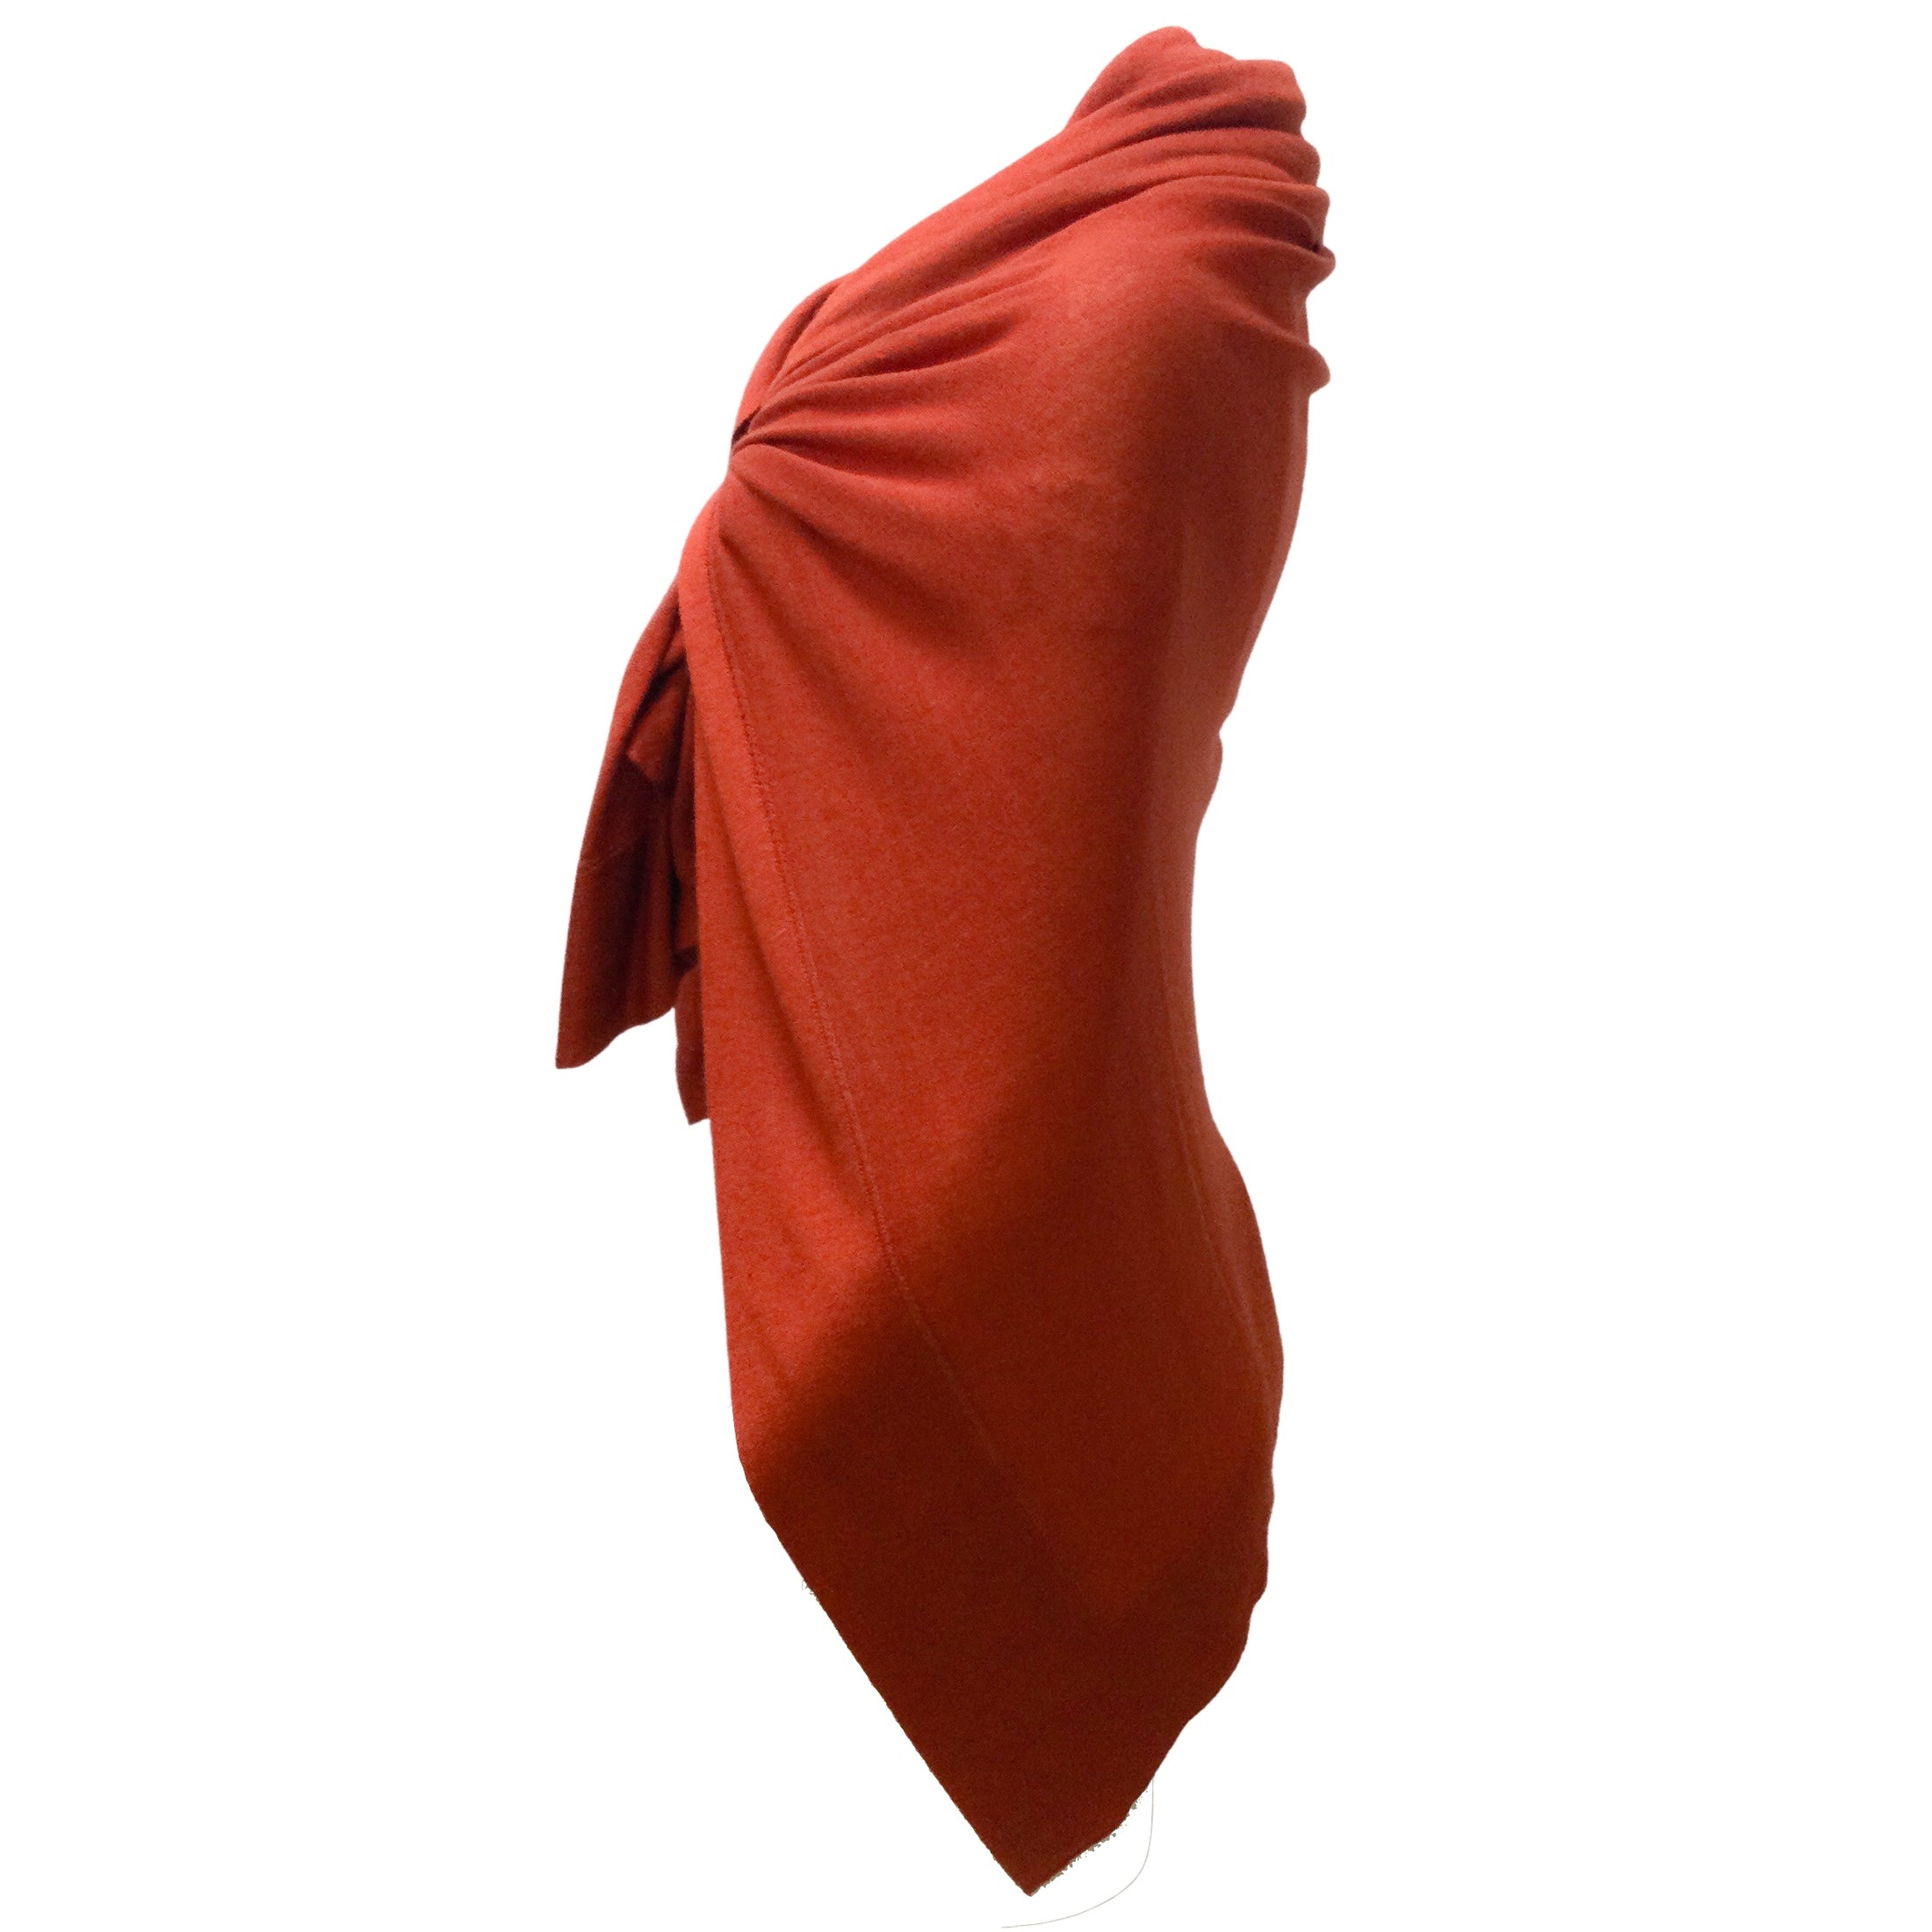 Oscar de la Renta Terracotta / Burnt Orange Cashmere and Silk Knit Square Scarf/Wrap